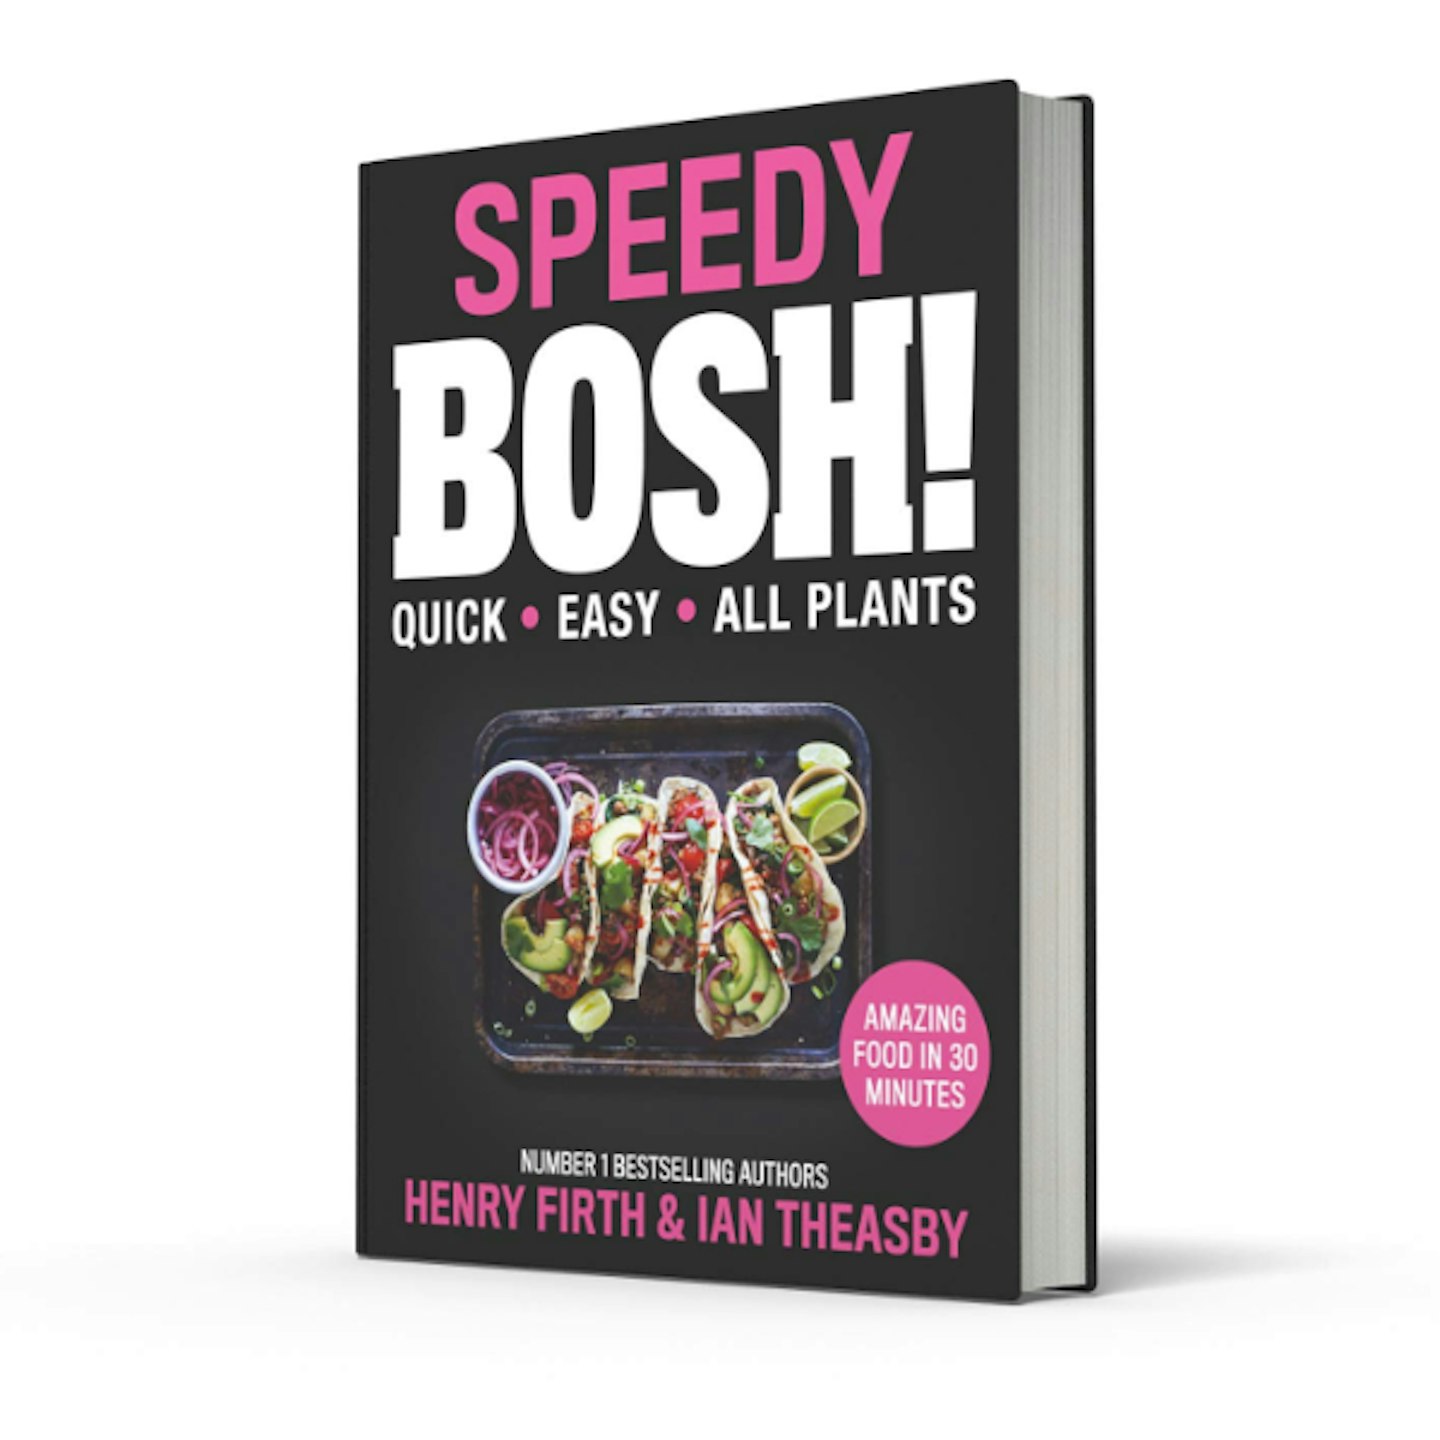 Speedy BOSH! Cookbook